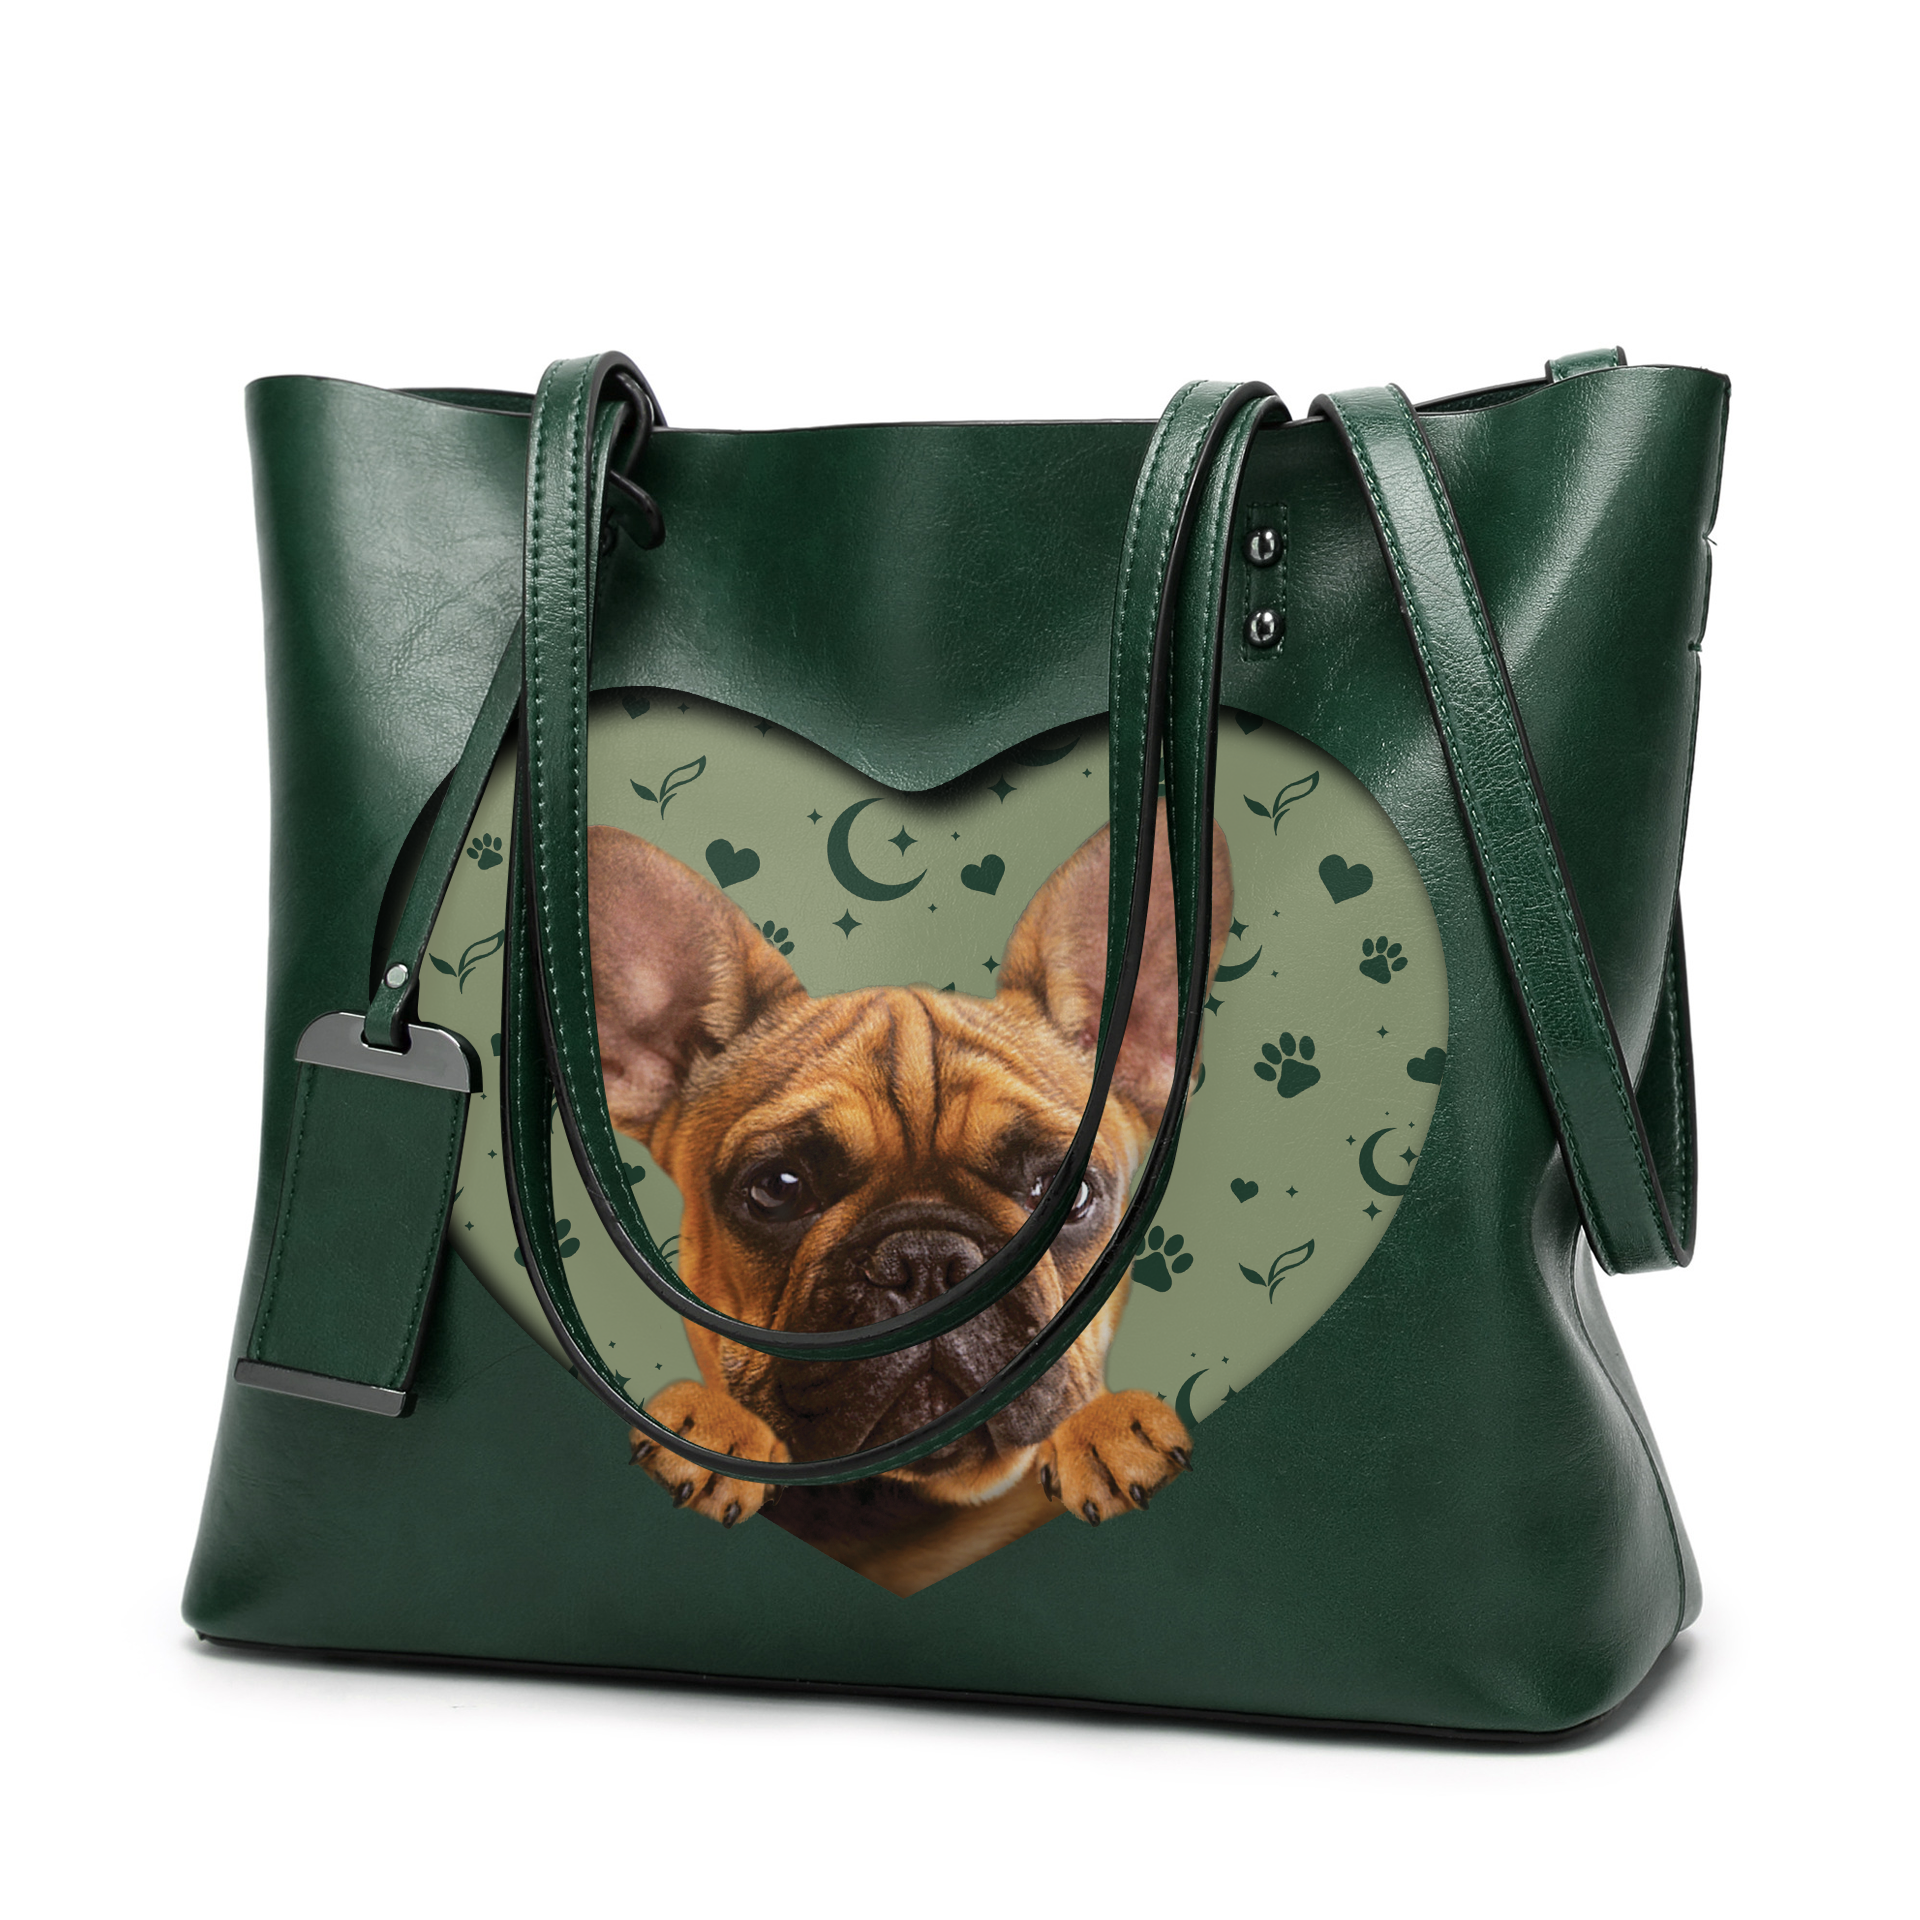 I Know I'm Cute - French Bulldog Glamour Handbag V1 - 12